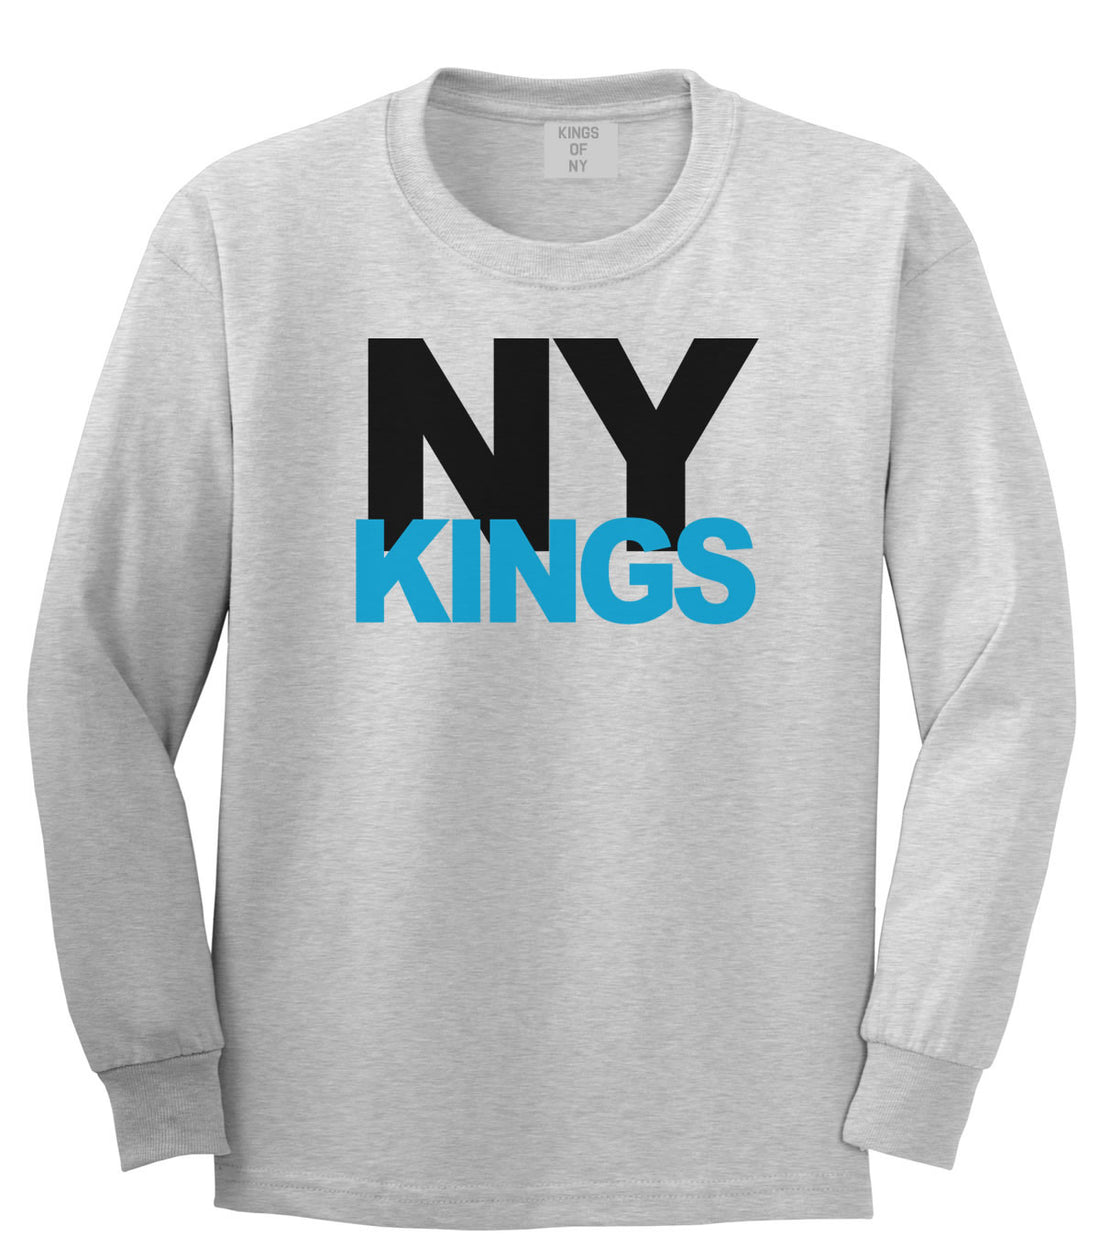 NY Kings Knows Long Sleeve T-Shirt in Grey By Kings Of NY